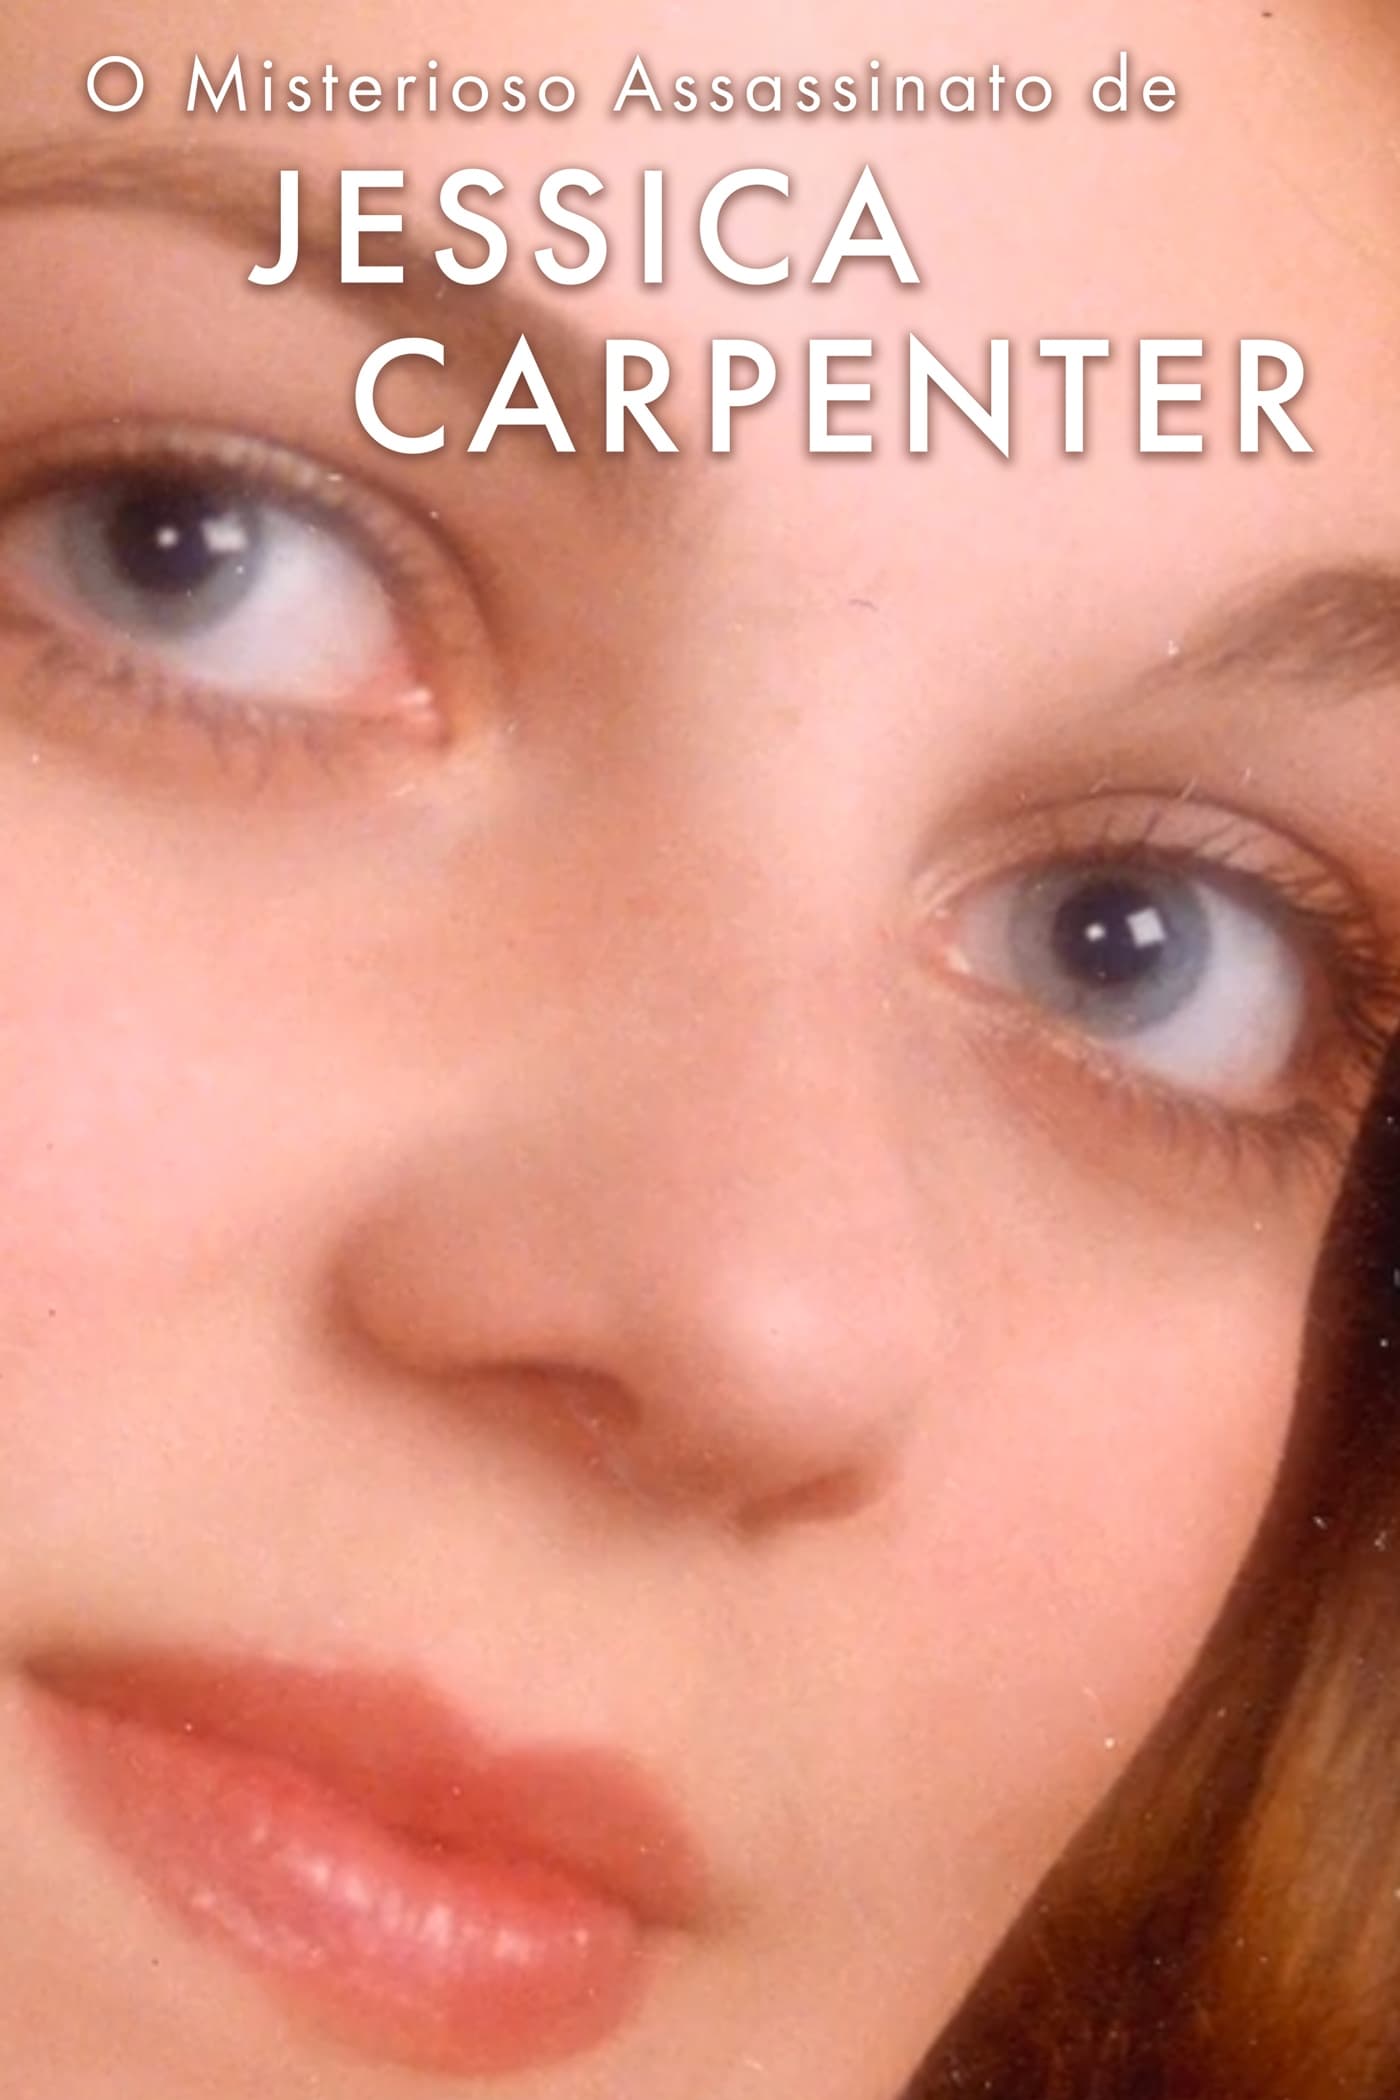 Who Killed Jessica Carpenter?